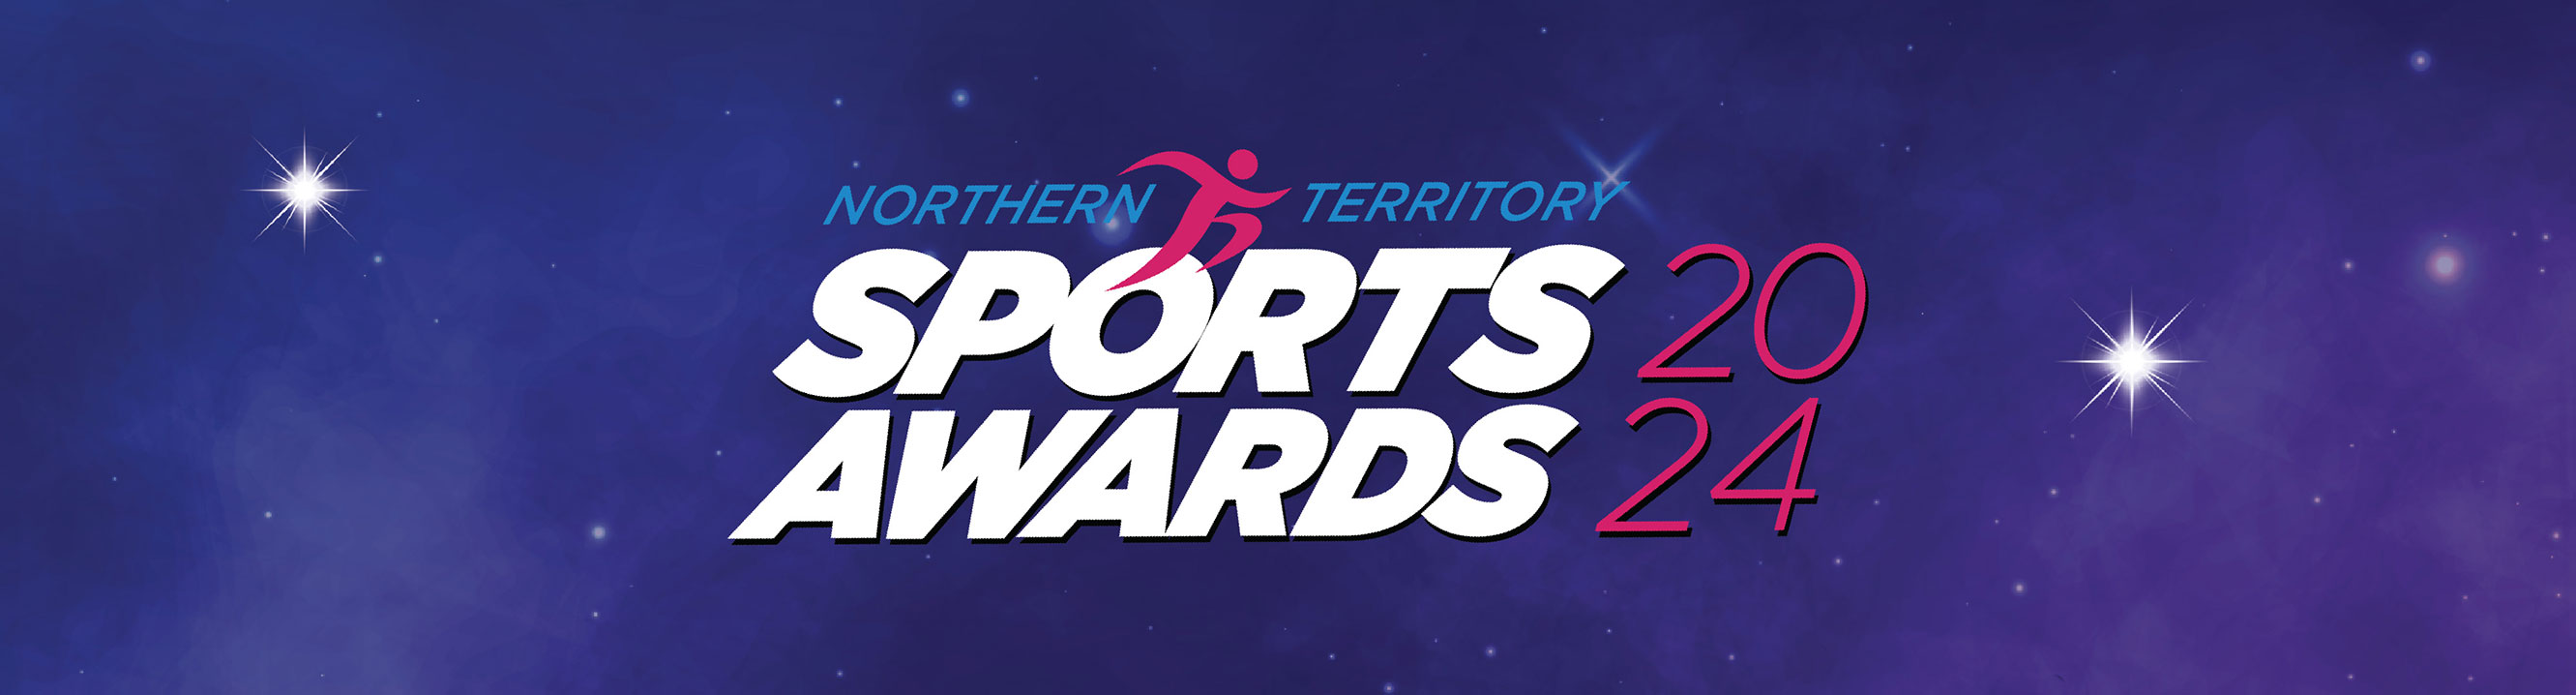 NT Sports Awards